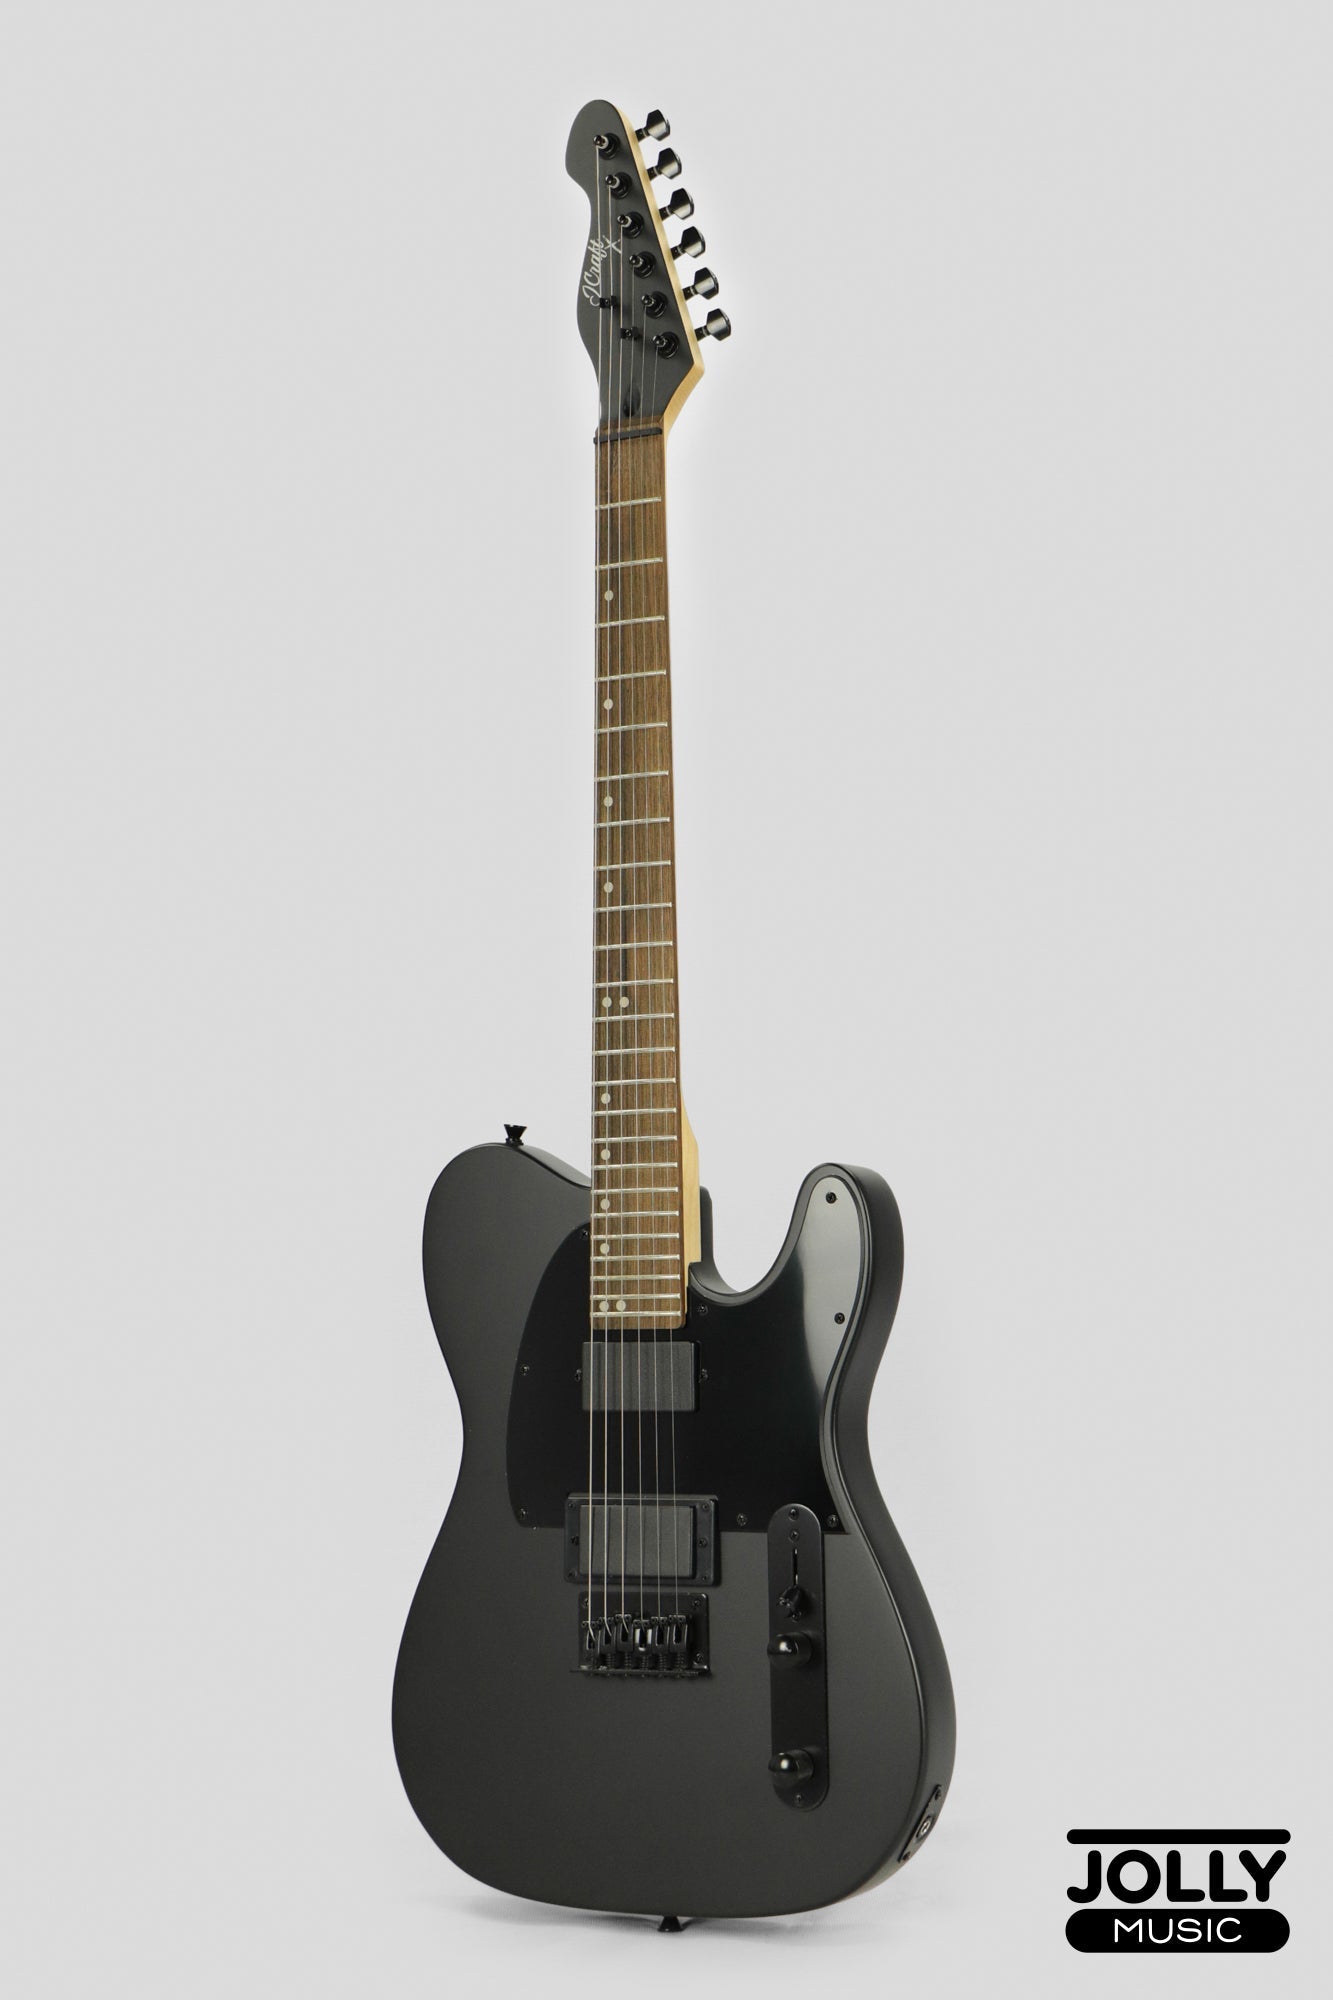 JCraft X Series LTX-2 Electric Guitar - Satin Black